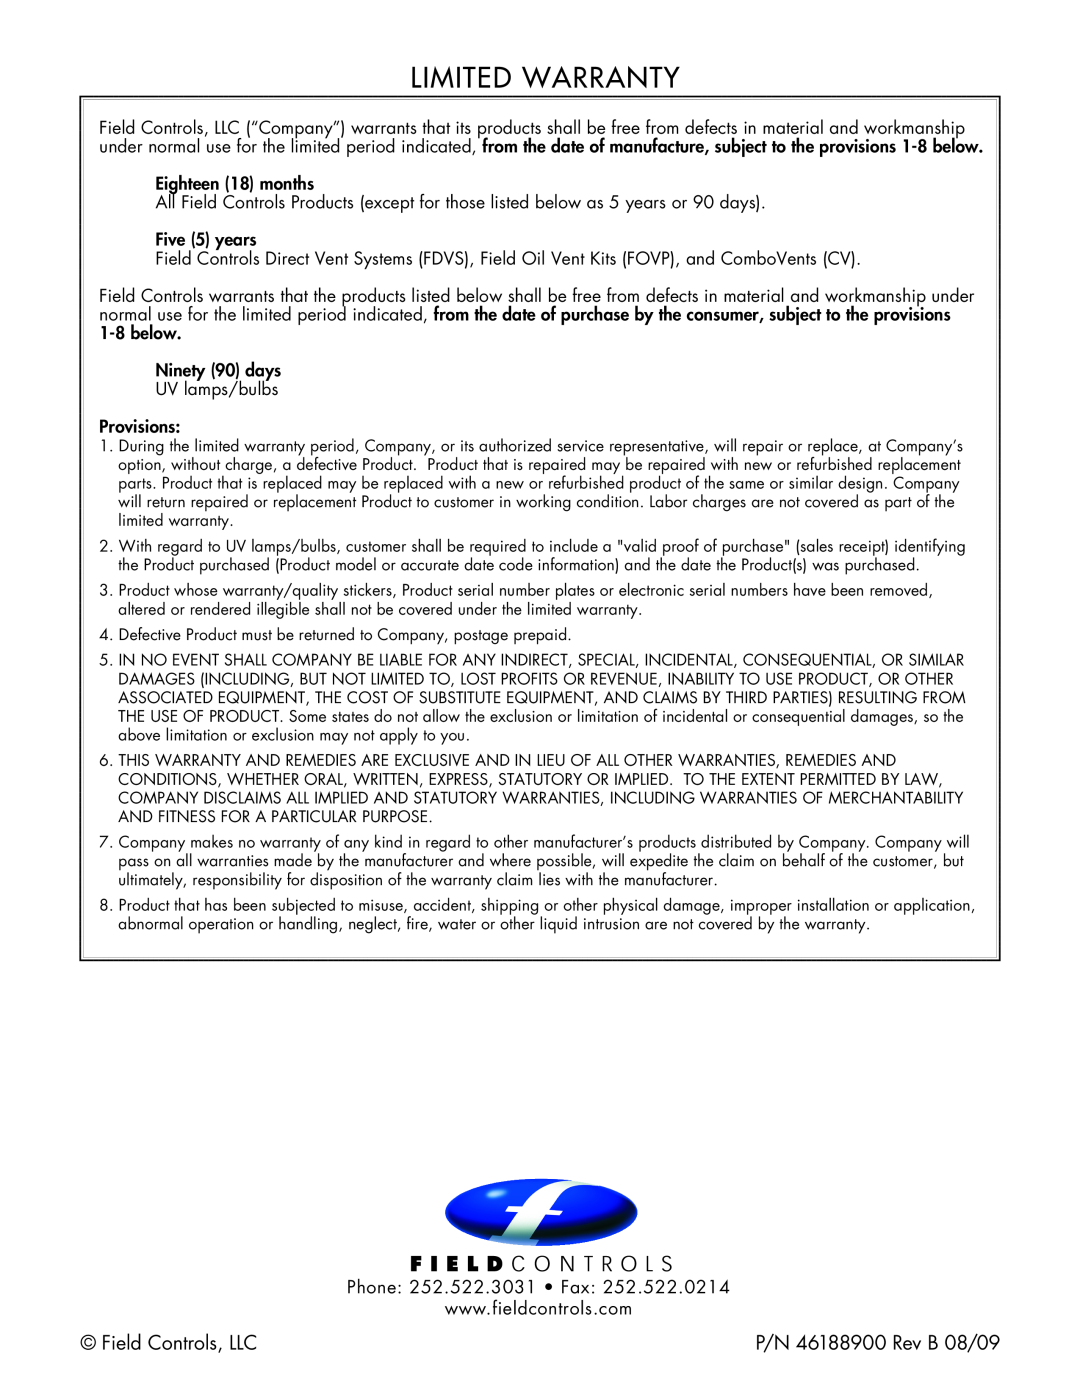 Field Controls CAC-120 installation instructions Limited Warranty, Field Controls, LLC, P/N 46188900 Rev B 08/09 